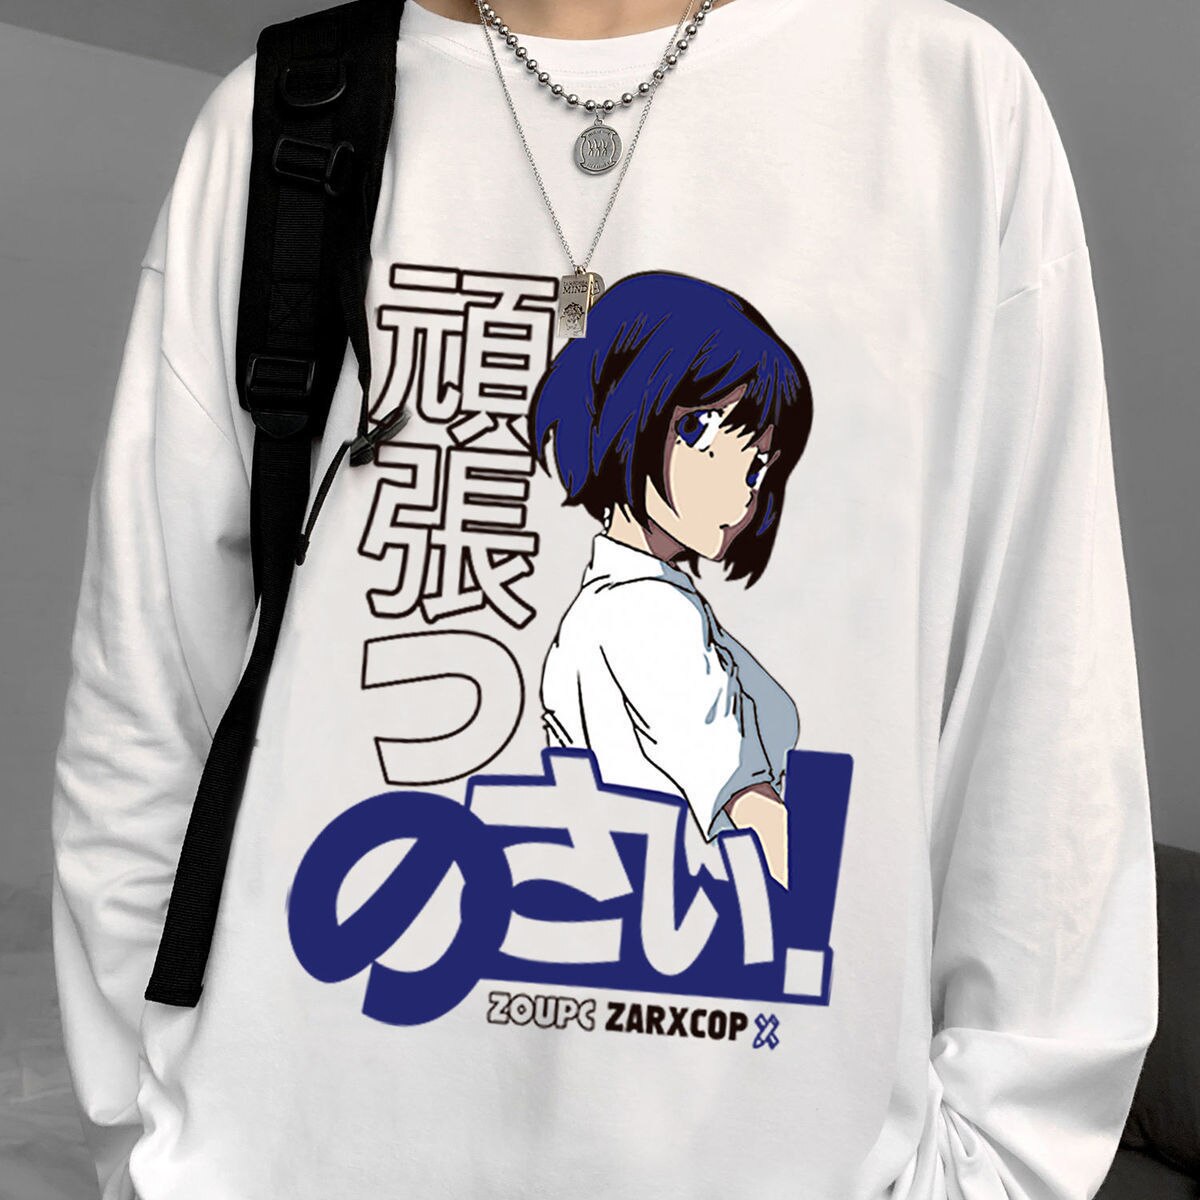 Anime and Happy Face Print Oversized Sweatshirt - White-Blue